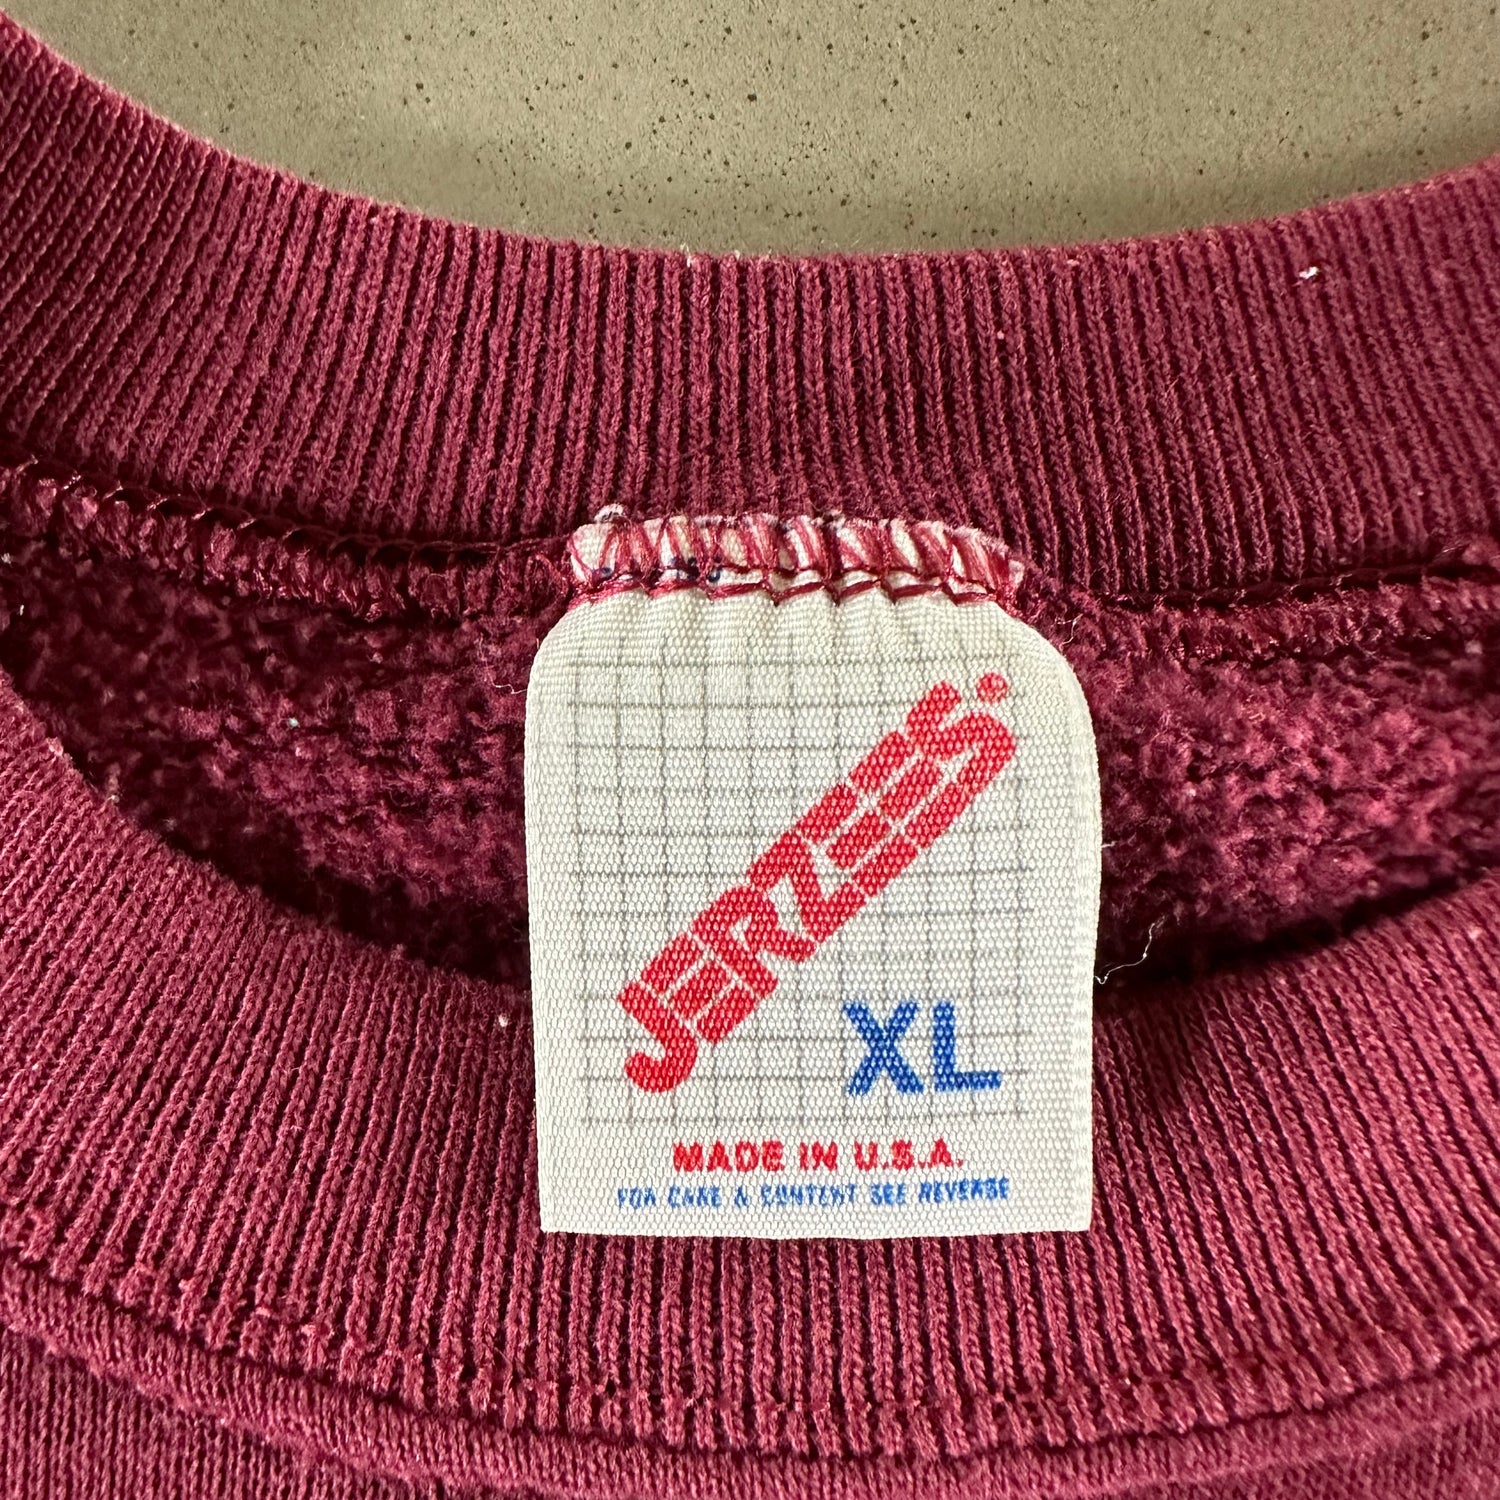 Vintage 1994 Shady Tree Sweatshirt size XL